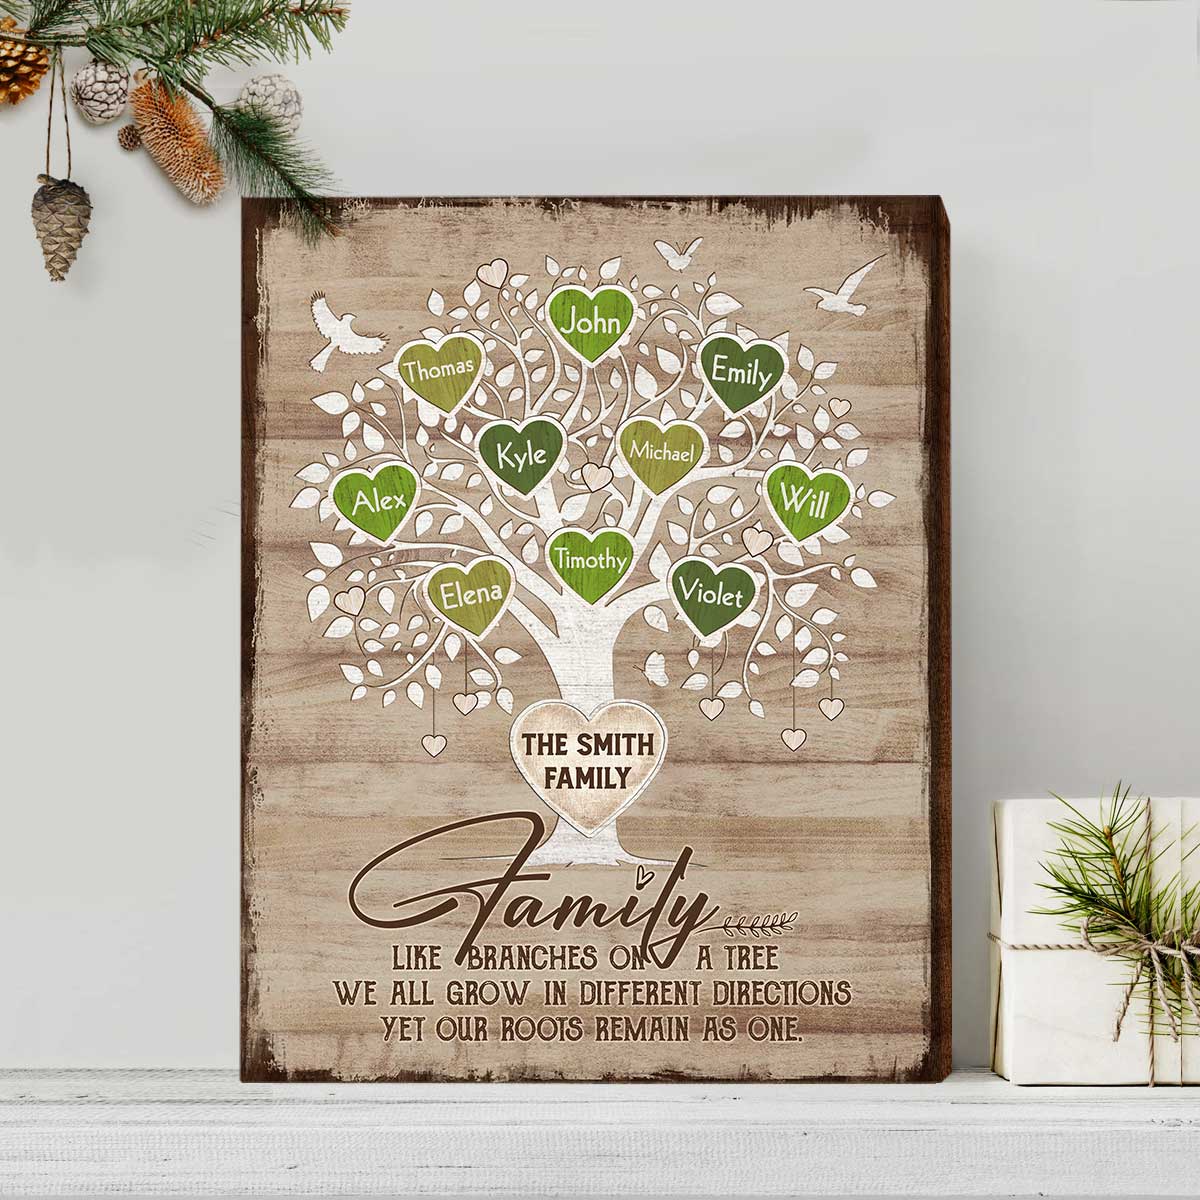 https://benicee.com/wp-content/uploads/2022/09/2f8e830b-3a4a-11ed-94d0-366e99cc6050__2022-Christmas-Gift-for-A-Whole-Family-Family-Tree-Wall-Decor-Family-Name-Personalized-Name-Sign-2_97920157-893b-4da9-a136-b6e301bb22d2.jpg